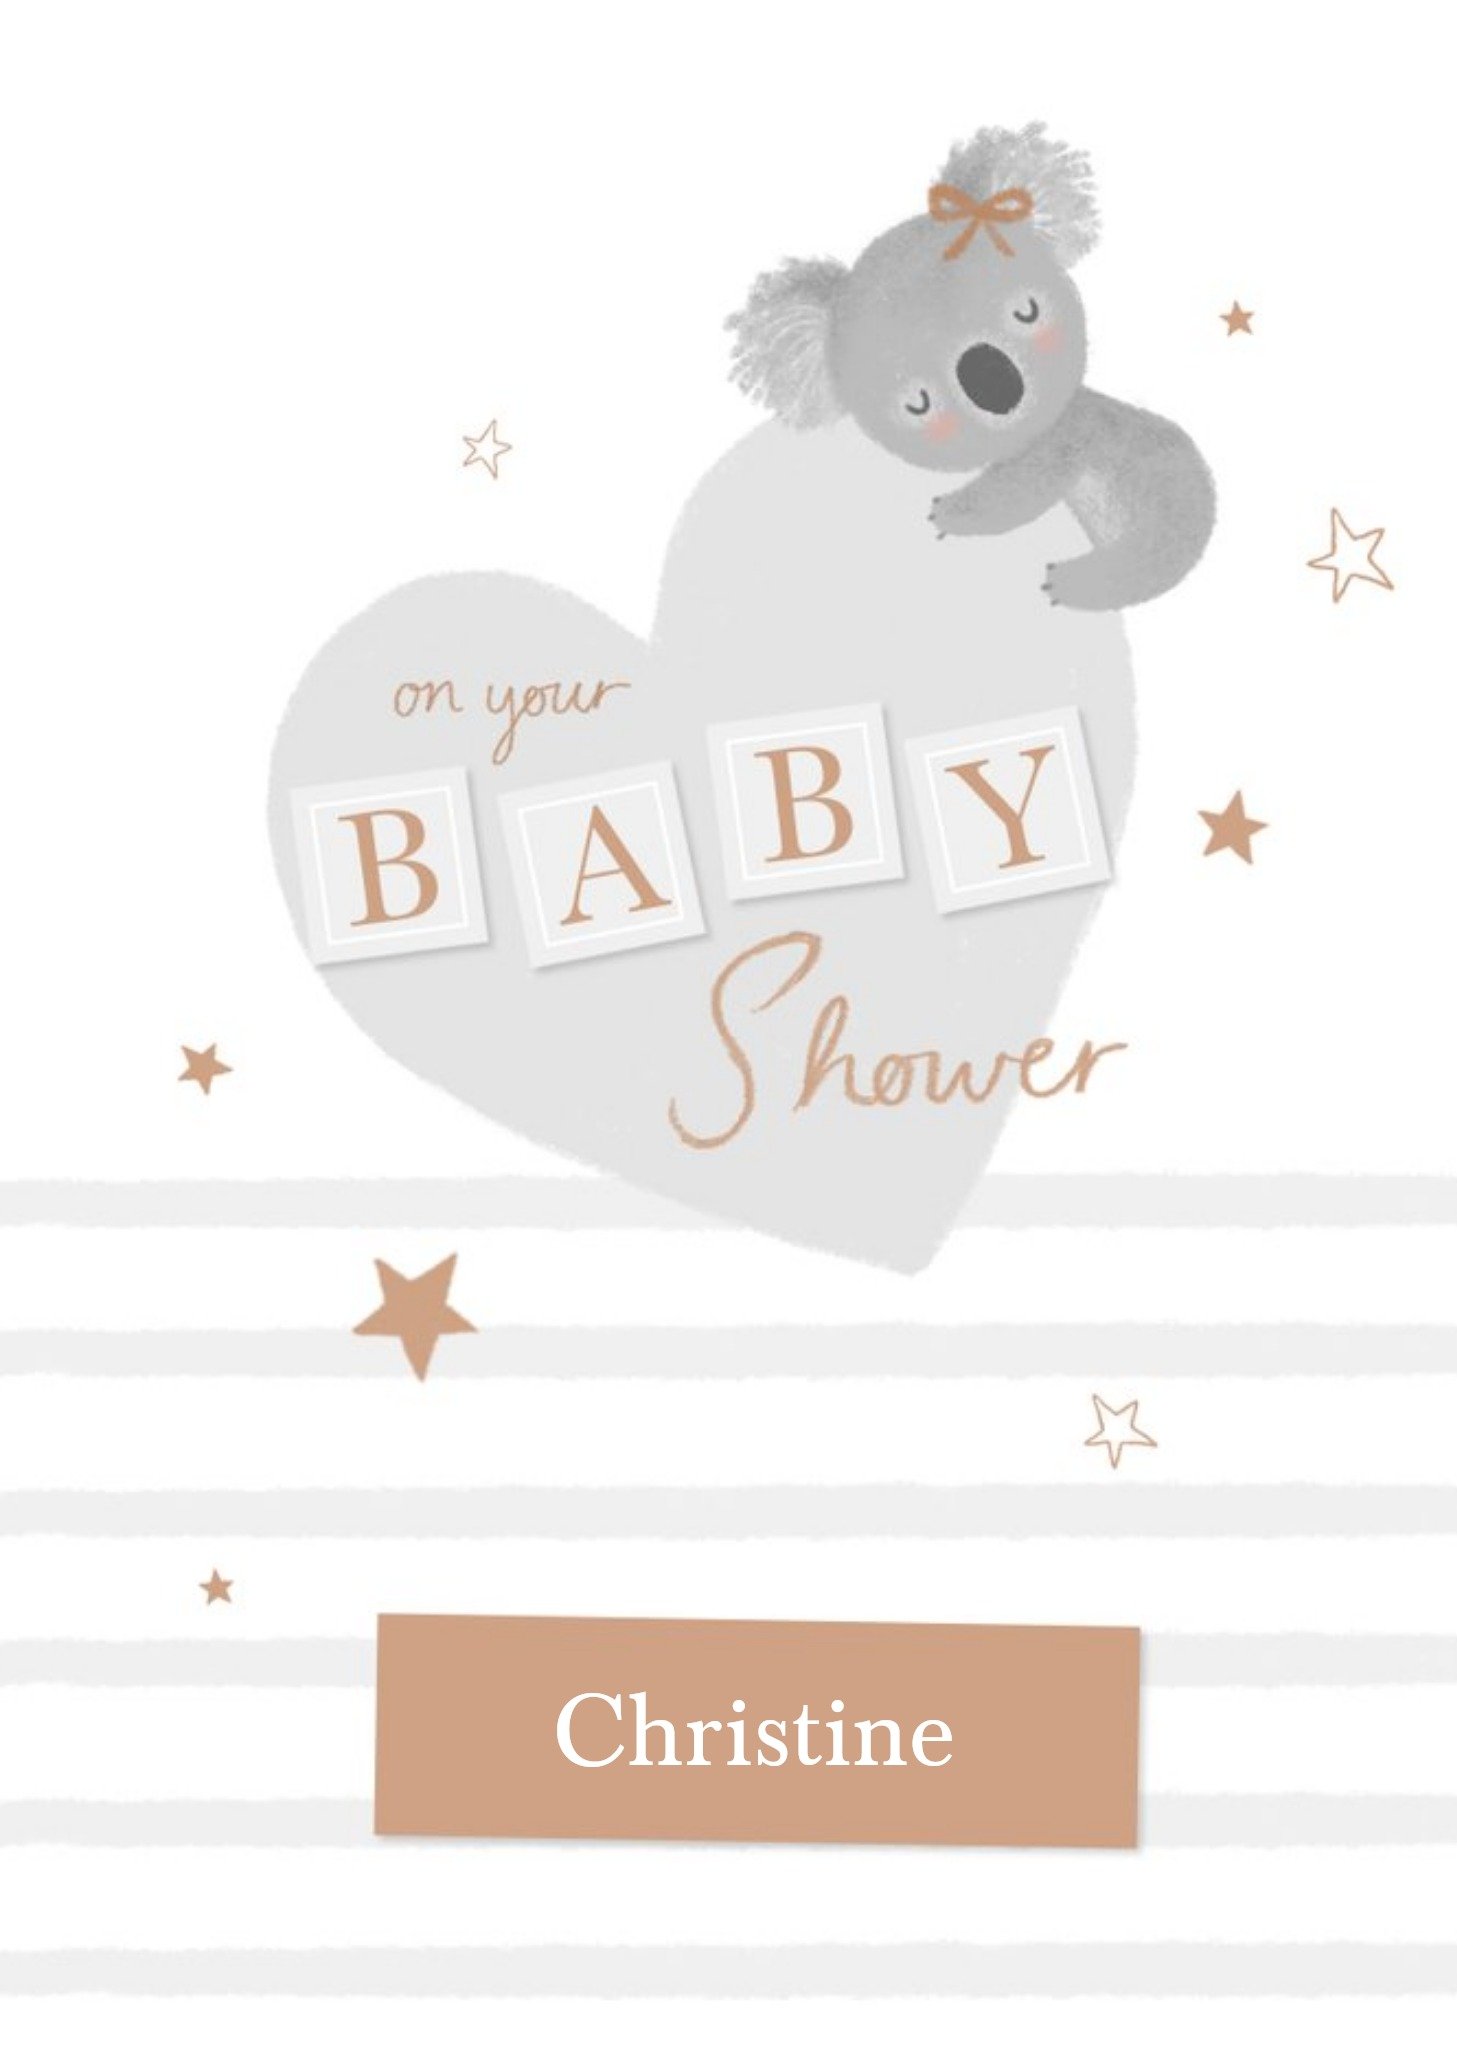 Moonpig Millicent Venton Illustrated Koala Baby Shower Card, Large